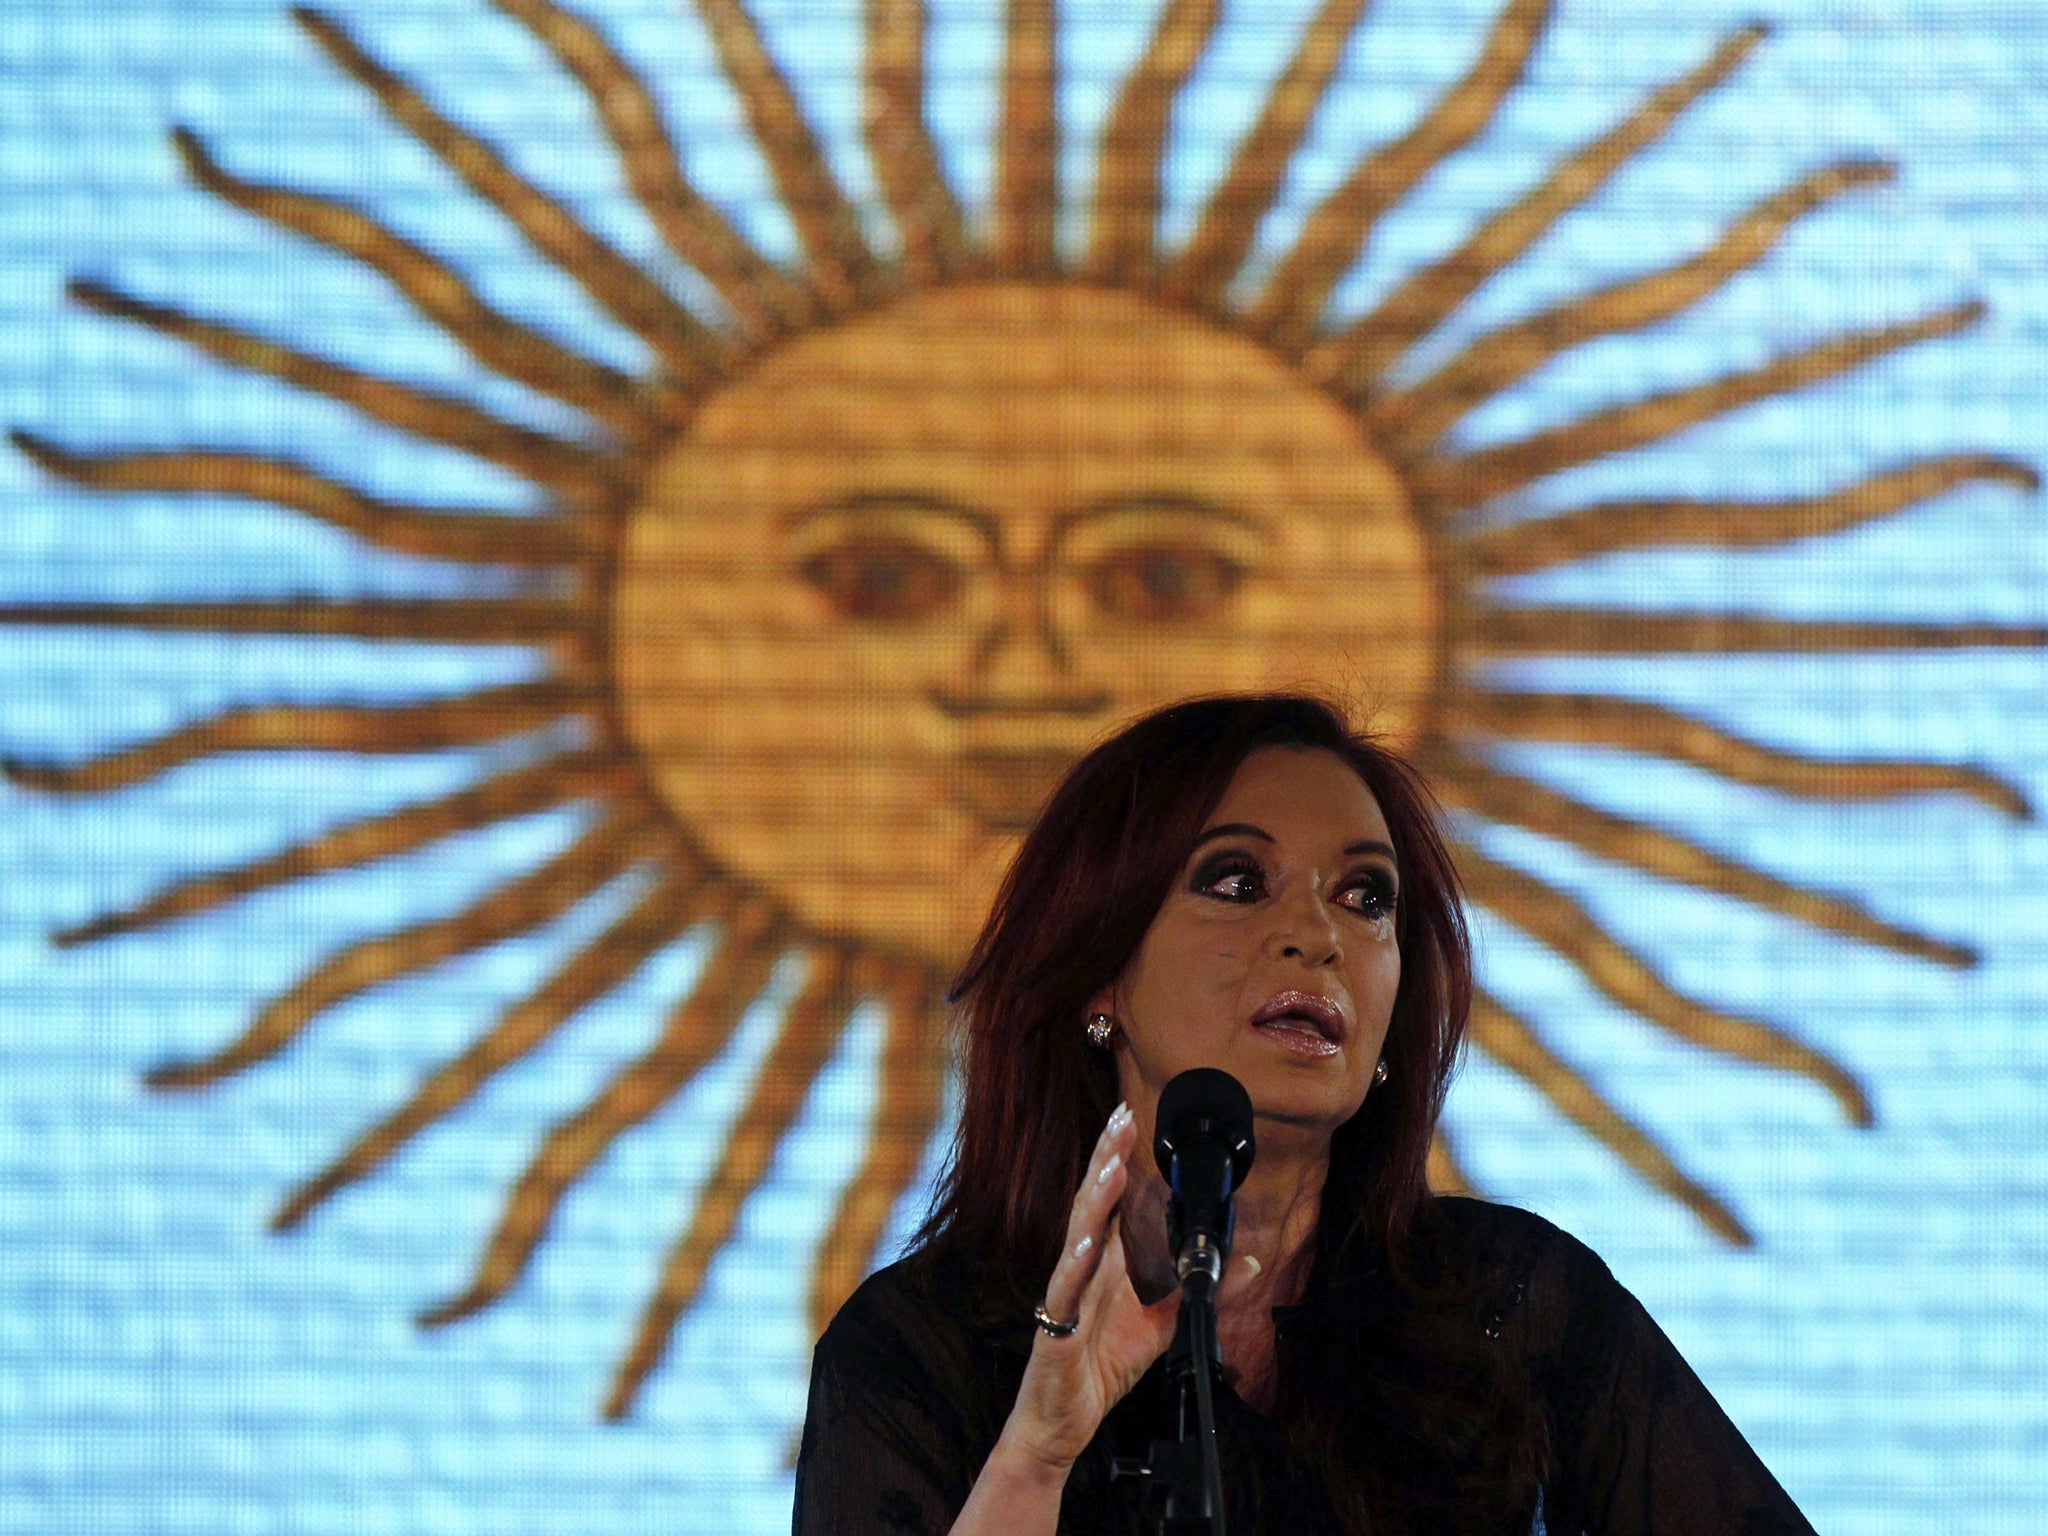 Cristina Fernandez de Kirchner insists the debt paper held by Paul Singer is illegitimate